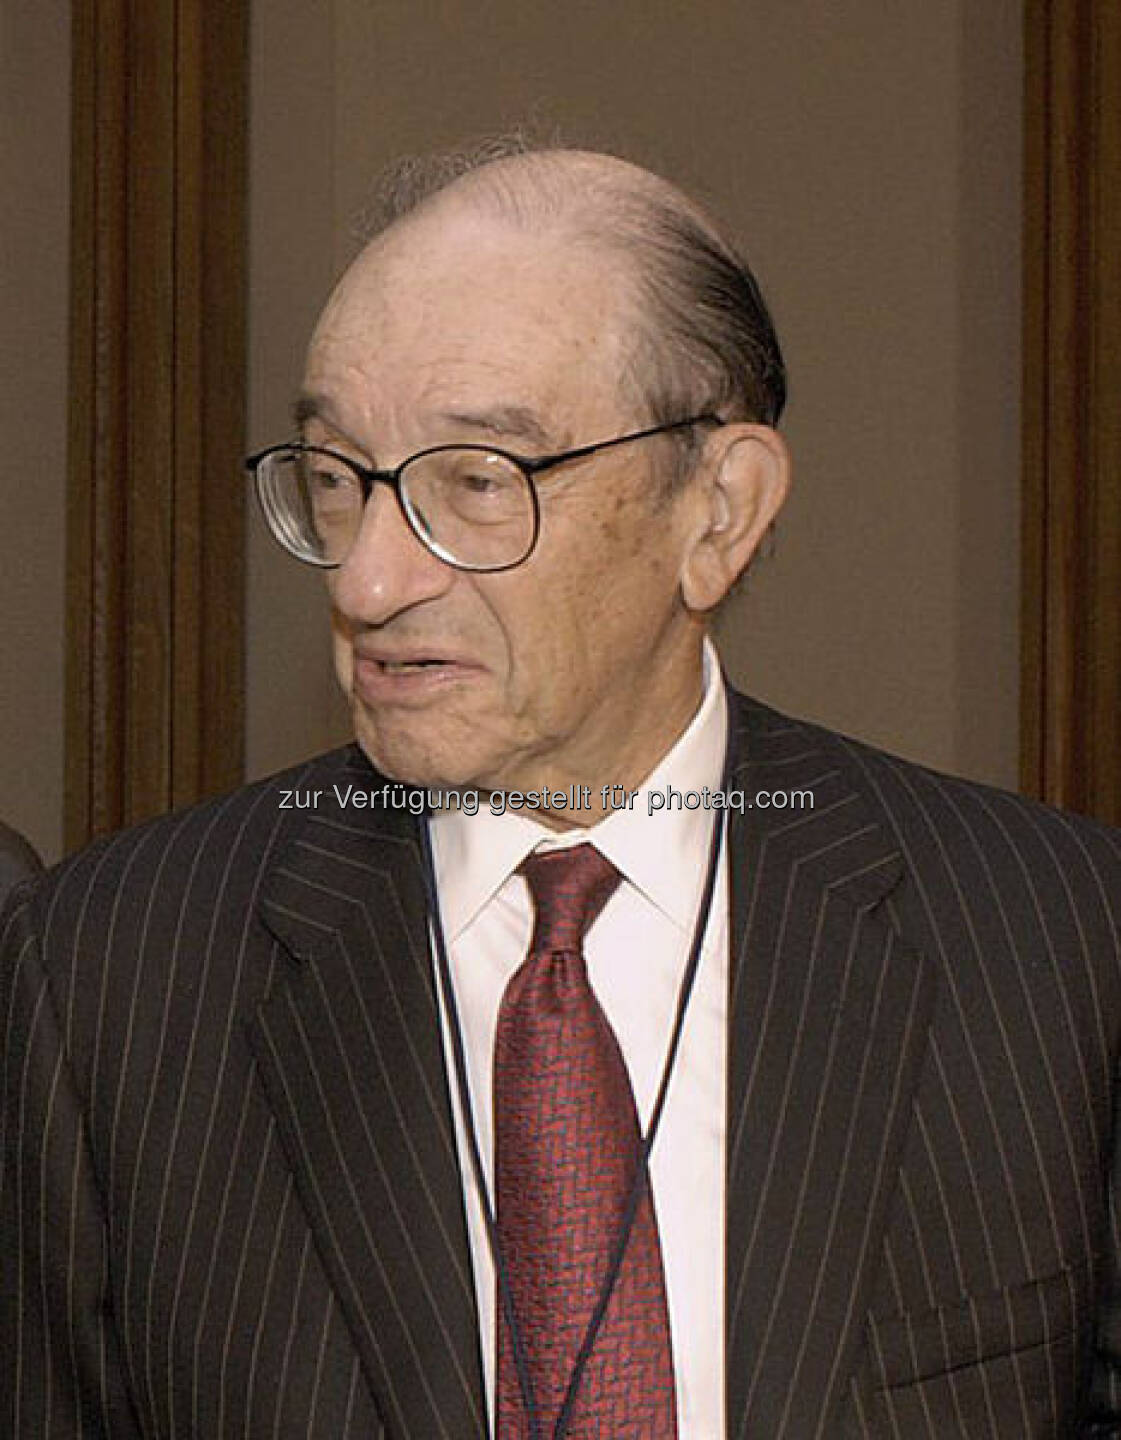 Alan Greenspan, legendärer Ex-Notenbankchef (6. März) Bild: wikipedia-Site - finanzmarktfoto.at wünscht alles Gute! 